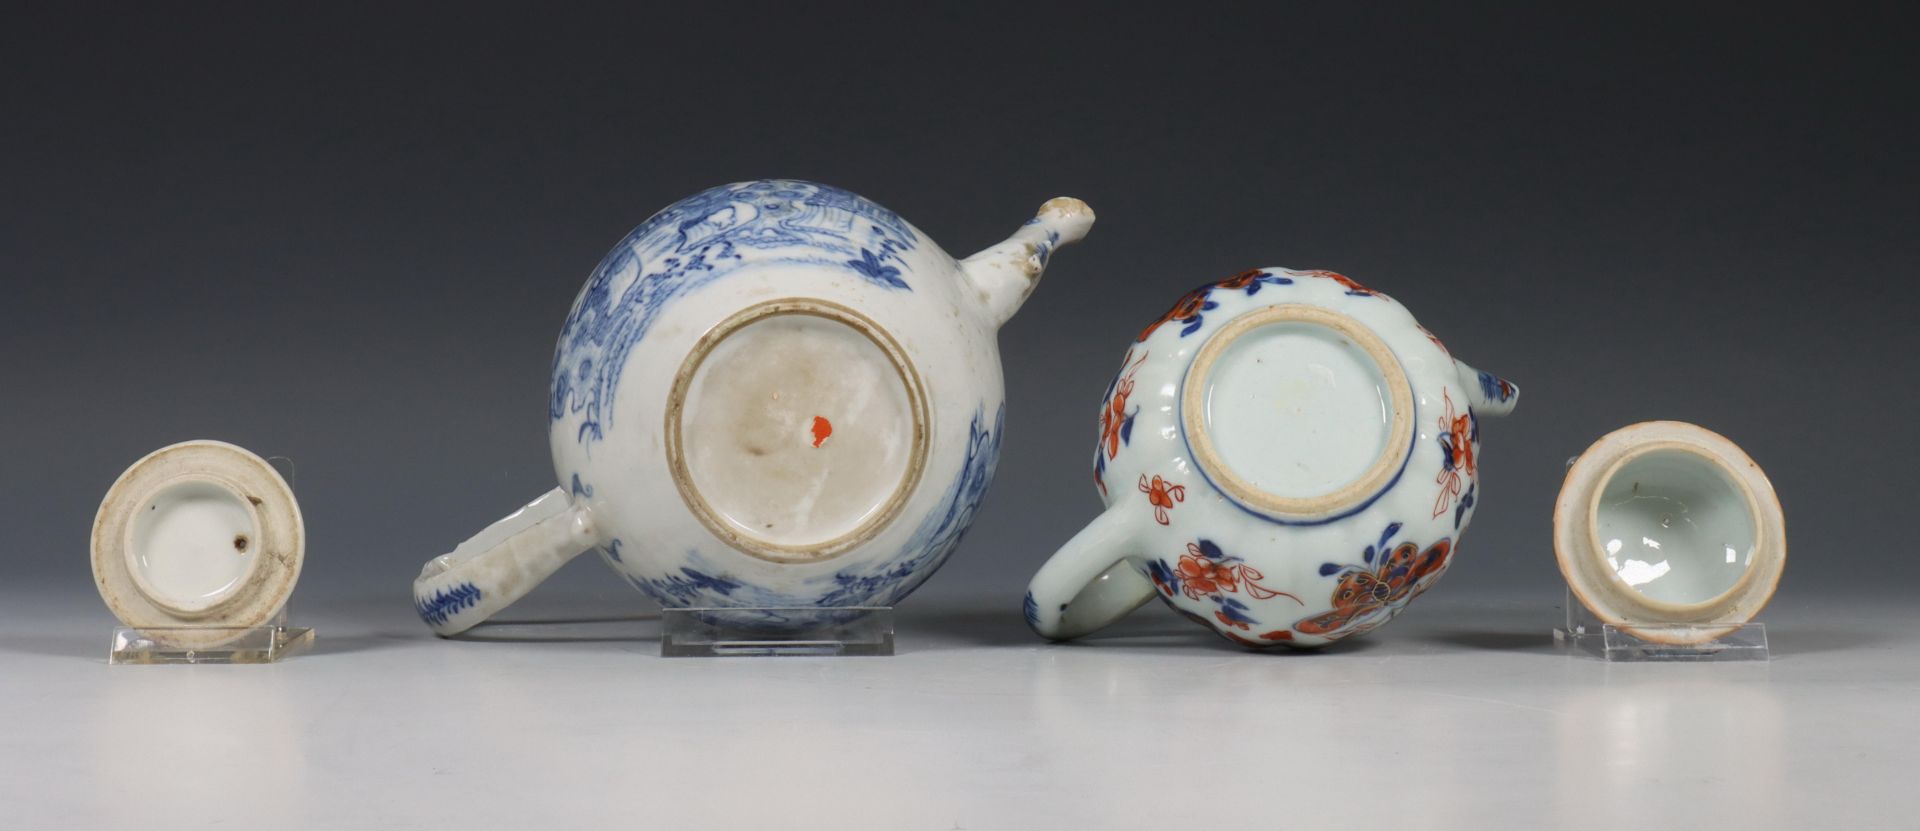 China, blauw-wit porseleinen en een Imari porseleinen theepot, 18e eeuw, - Bild 3 aus 7